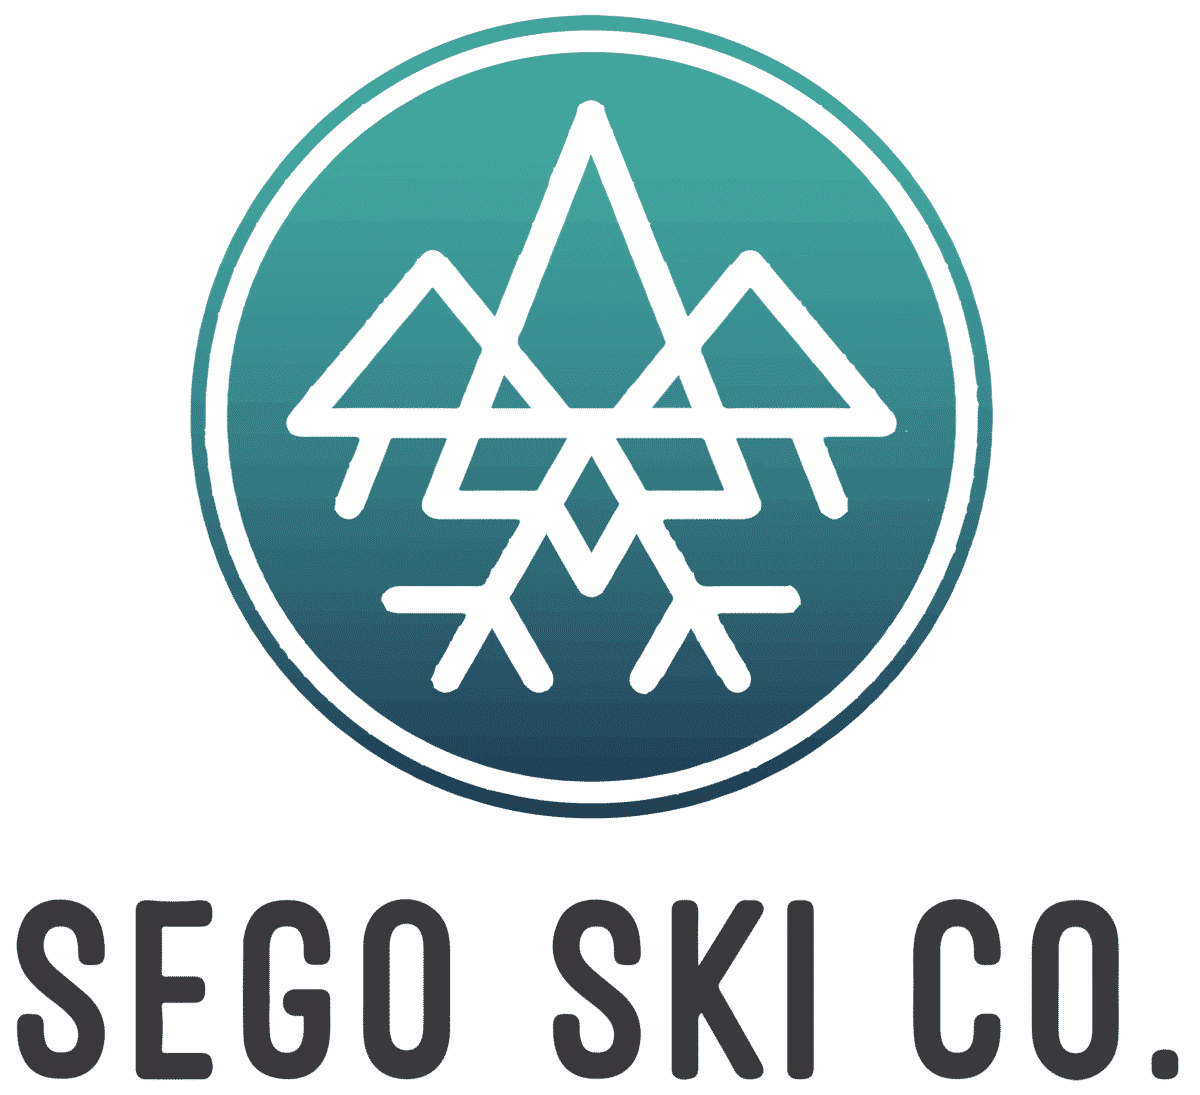 Sego_Logo_Transparent_background-2_1200x1200